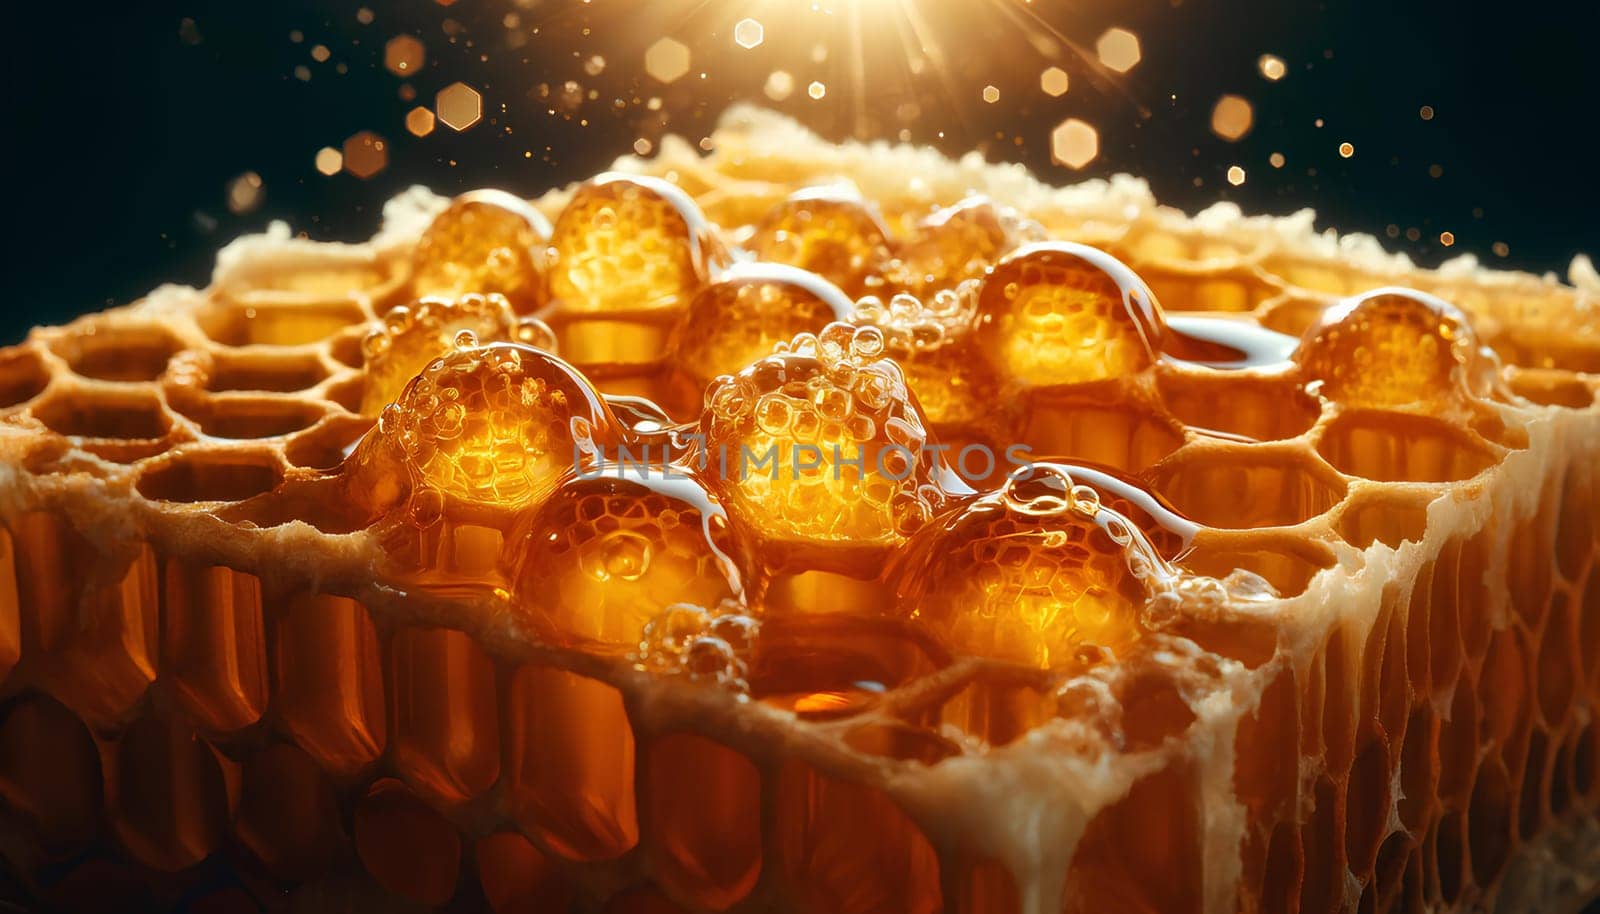 A piece of golden comb honey in sunlight close up.